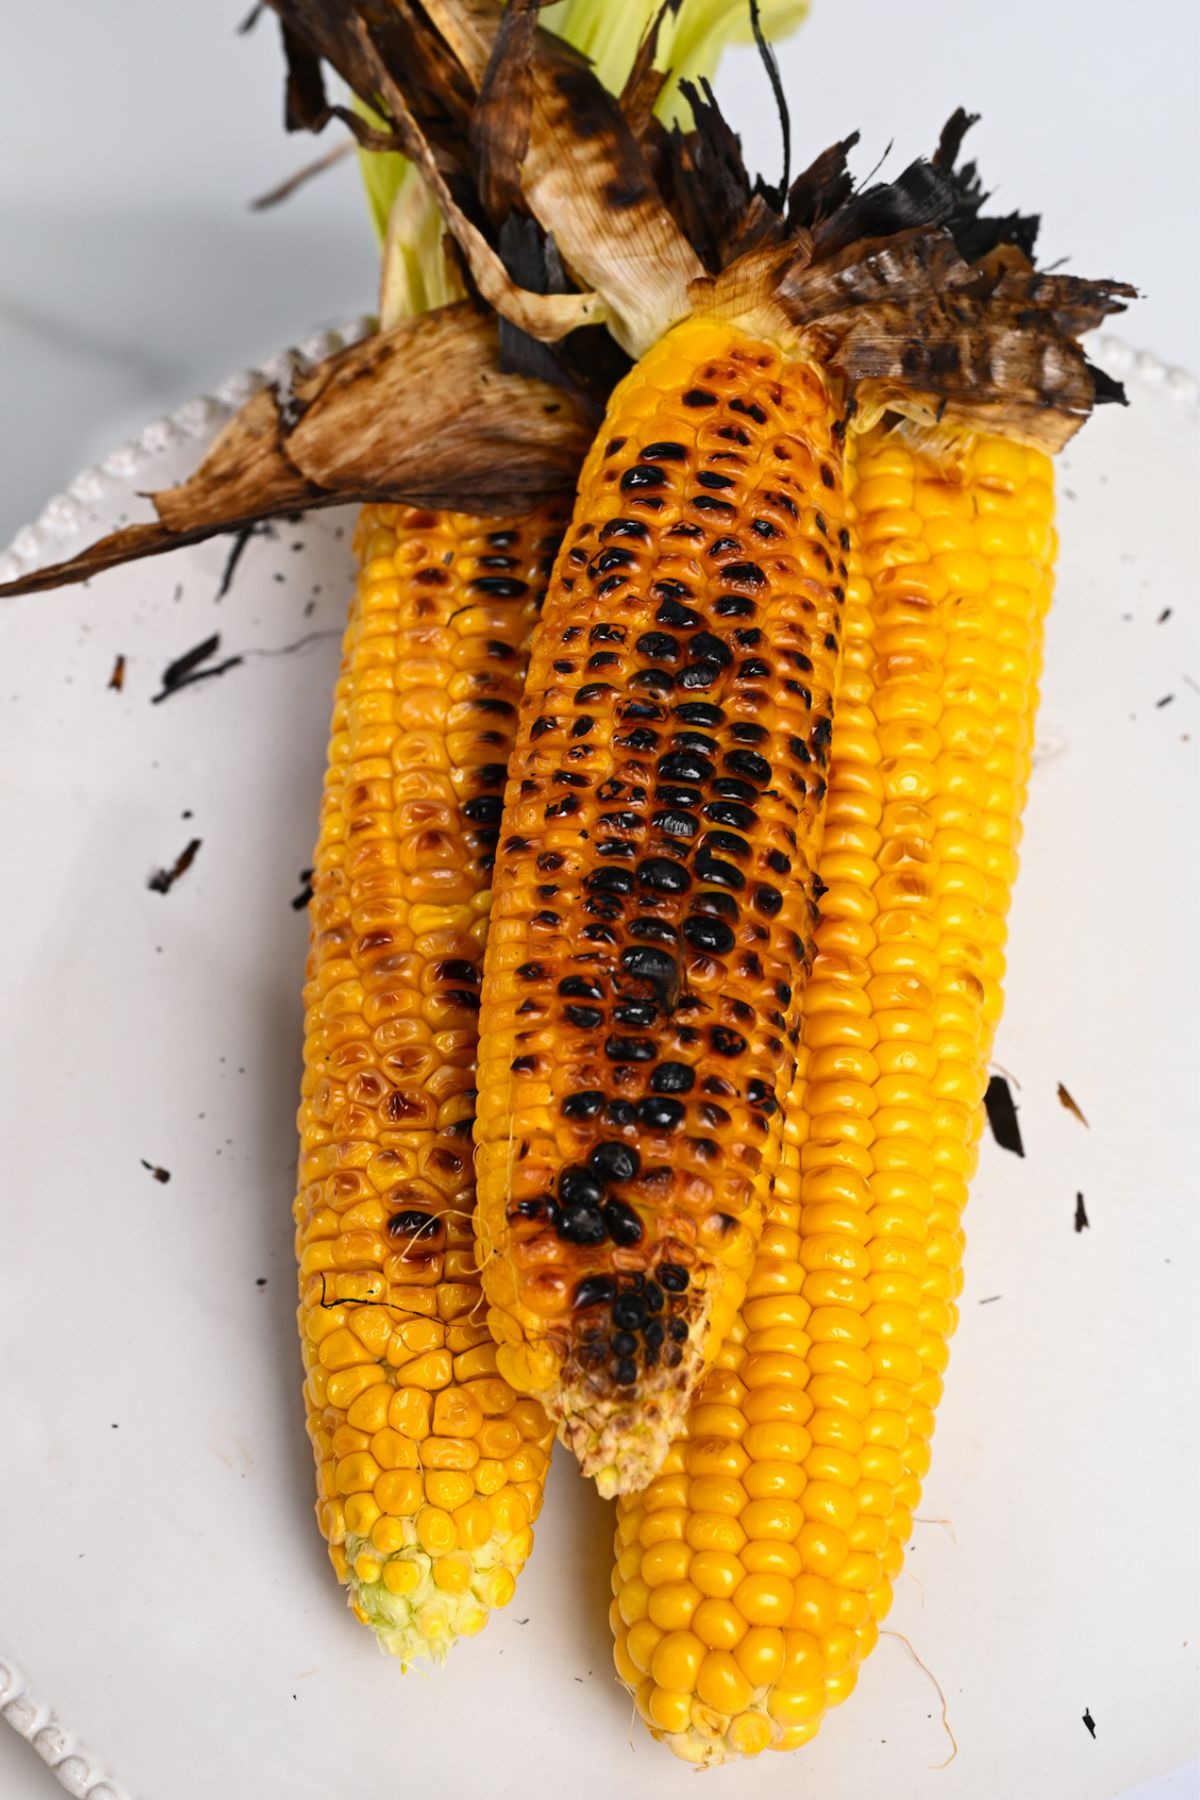 Three grilled corns on the cob